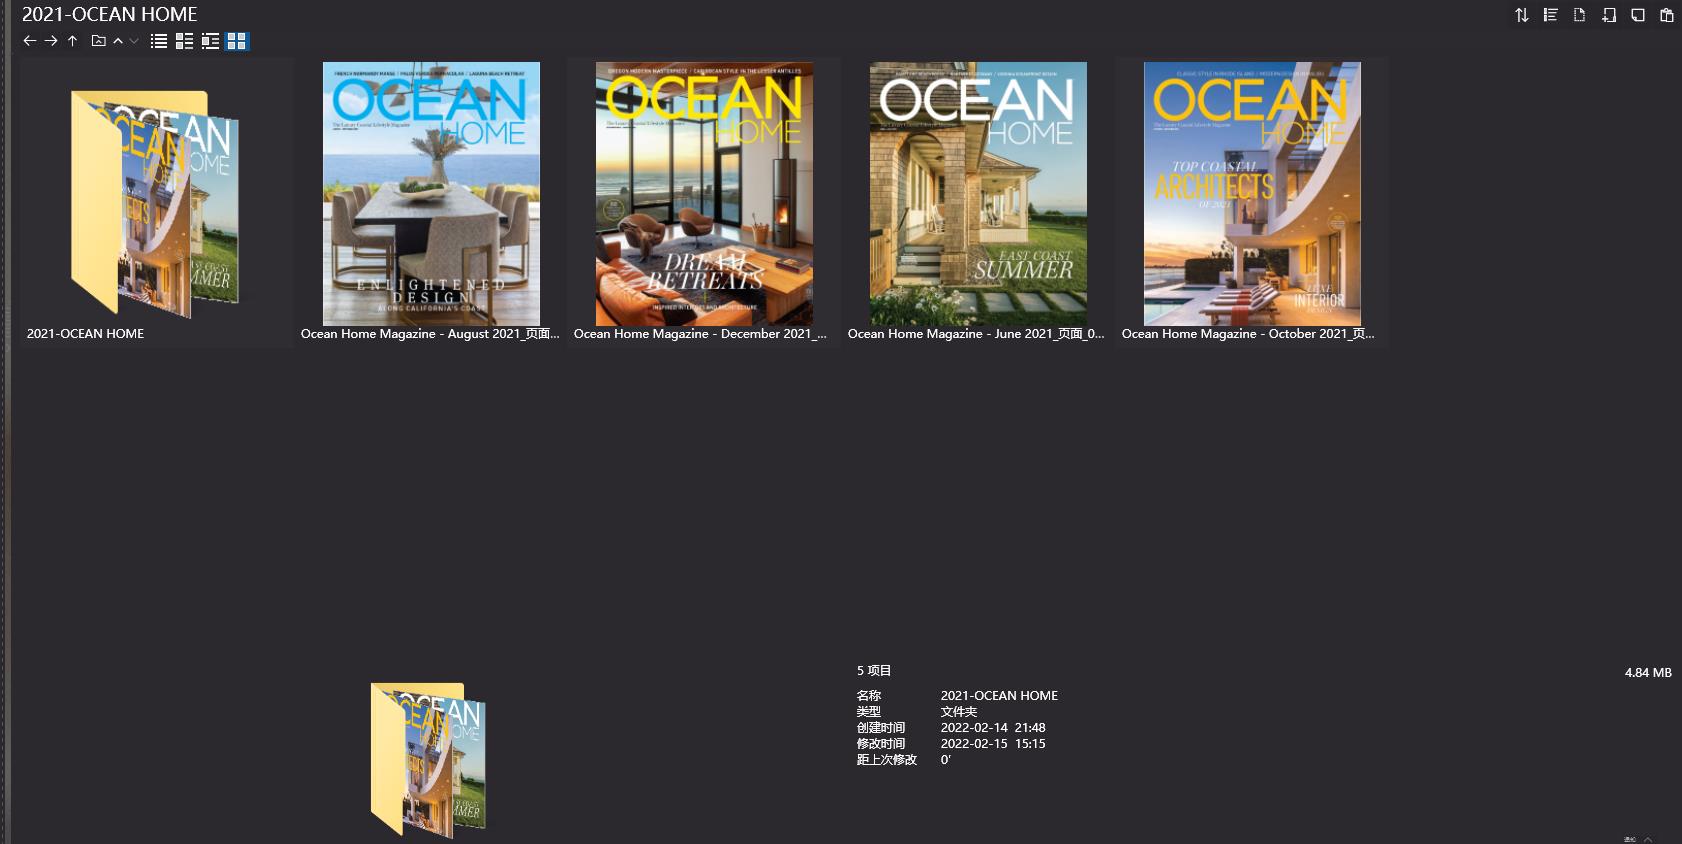 別墅設計雜誌Ocean Home Magazine,Ocean Home Magazine,別墅設計雜誌,軟裝設計雜誌,Ocean Home Magazine設計電子雜誌,雜誌下載,Ocean Home Magazine雜誌合集